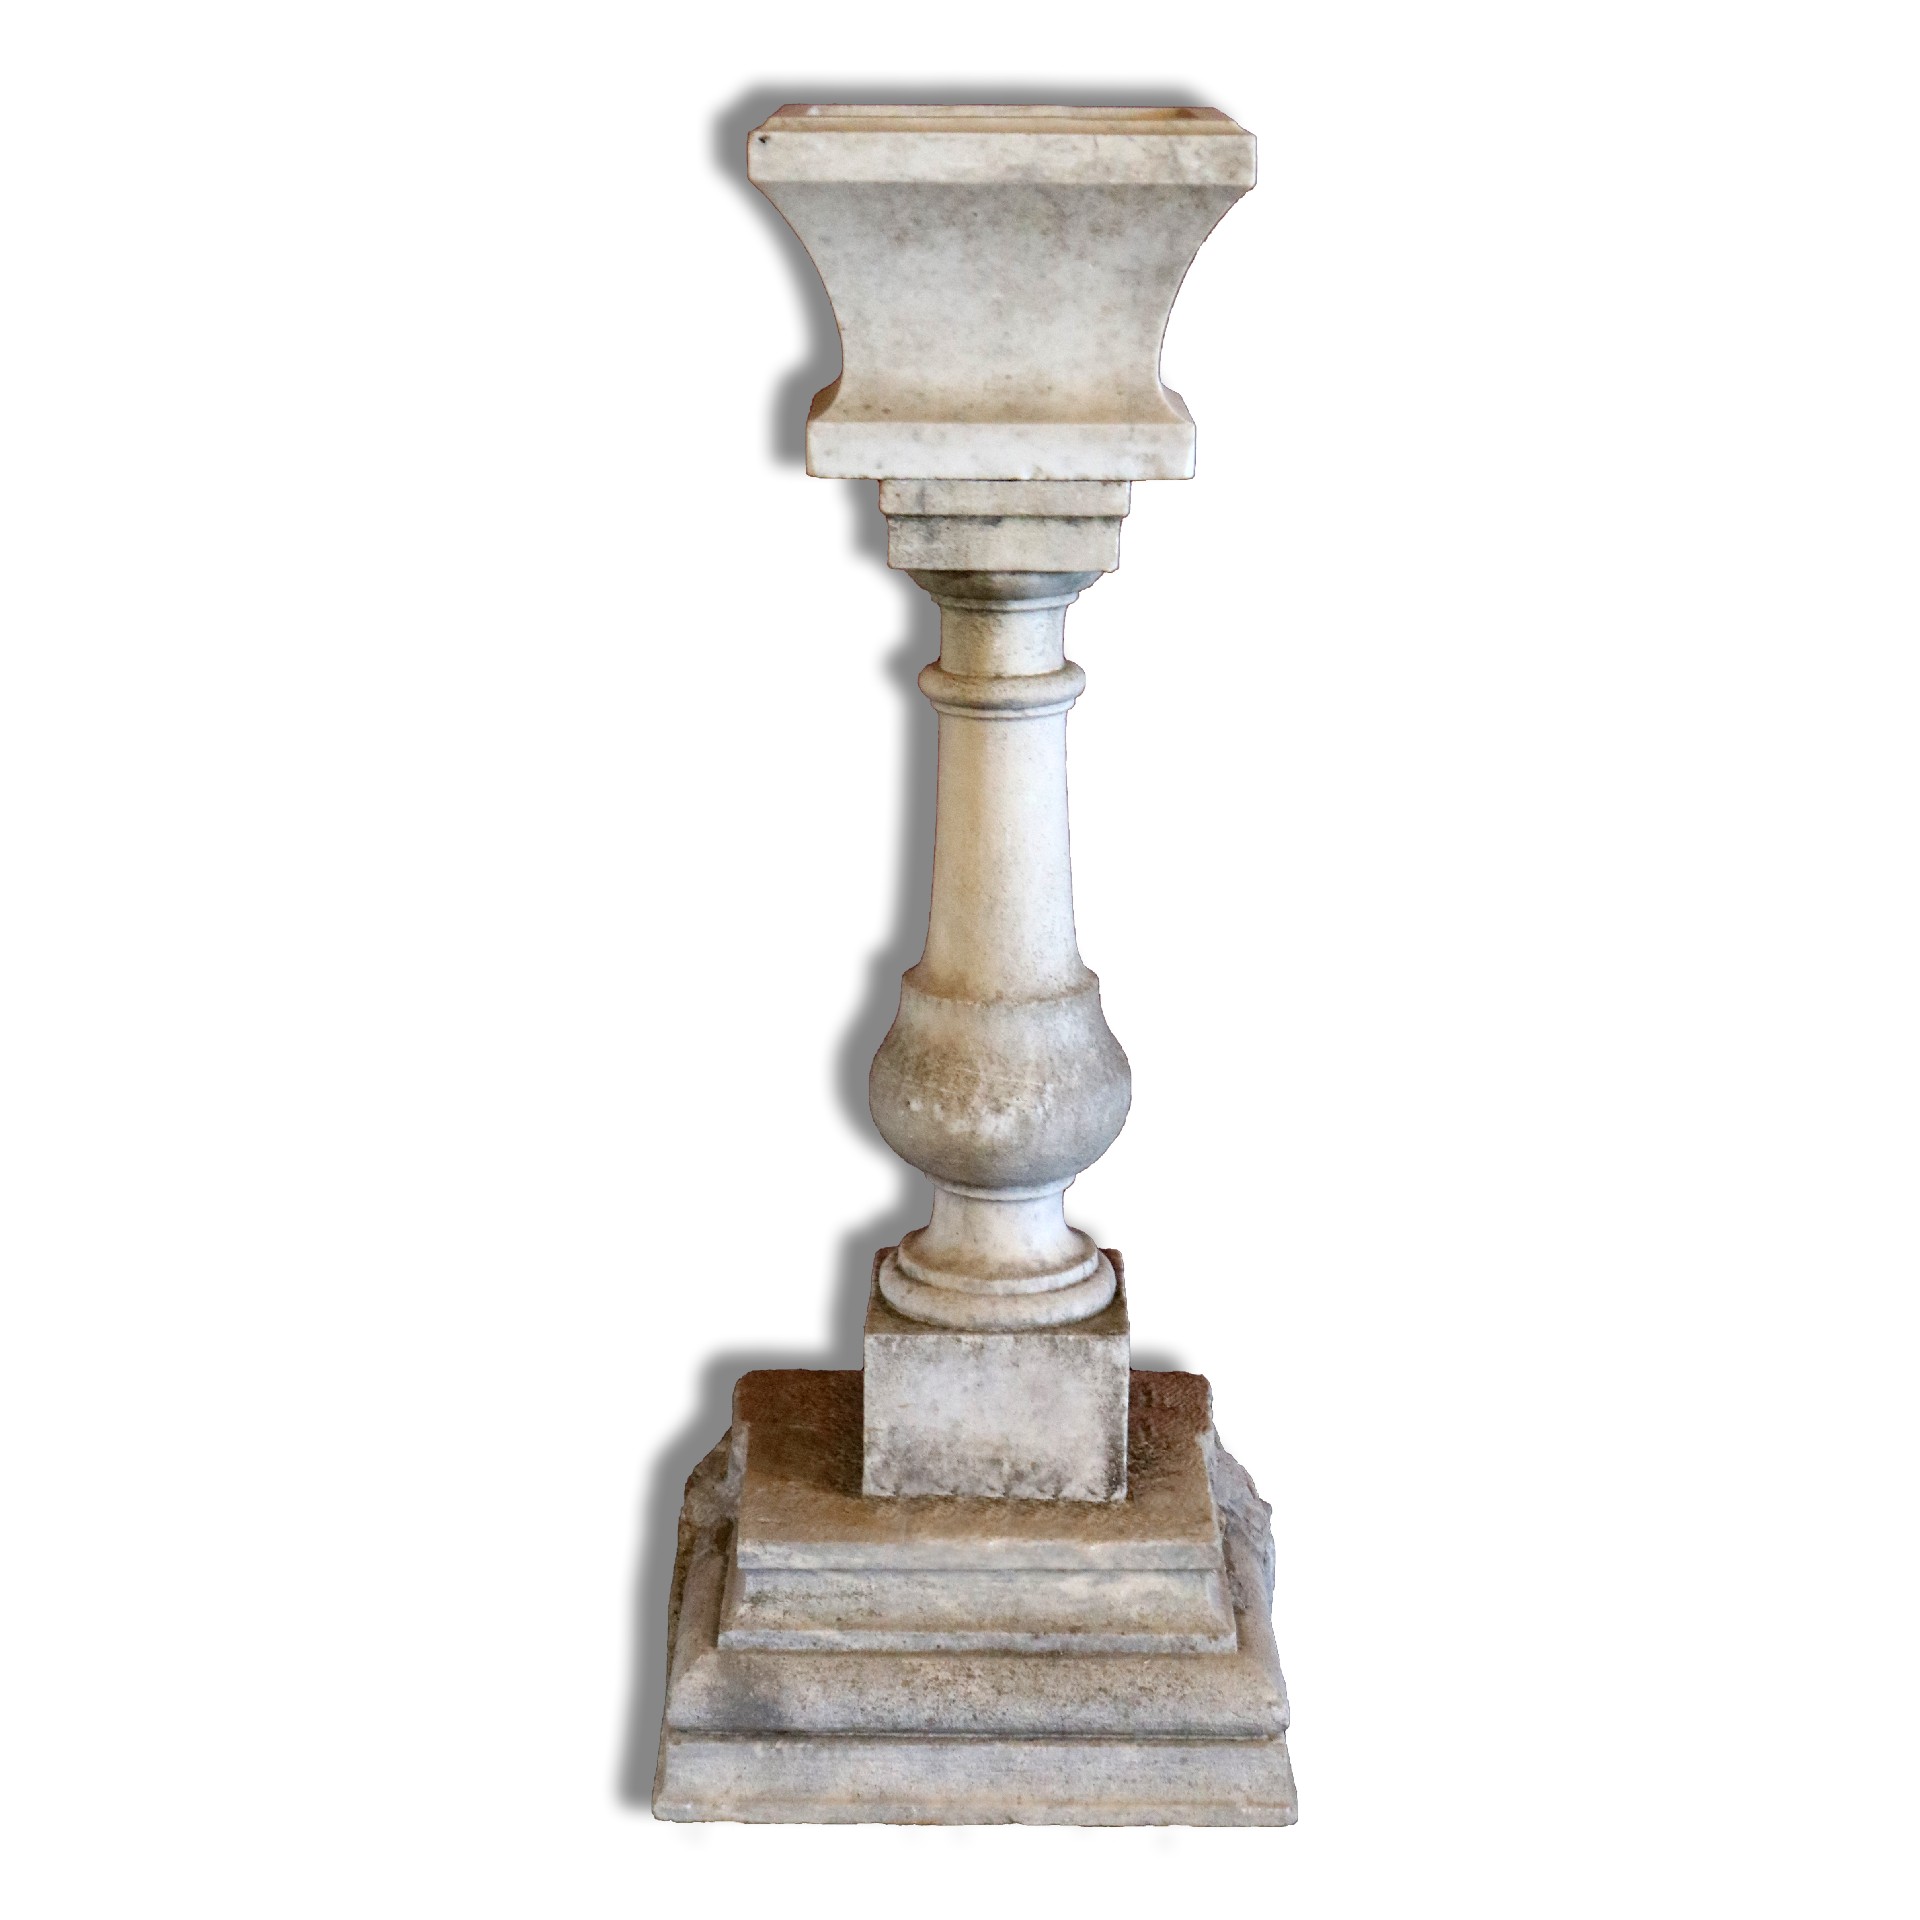 Antica fontana in marmo. - 1